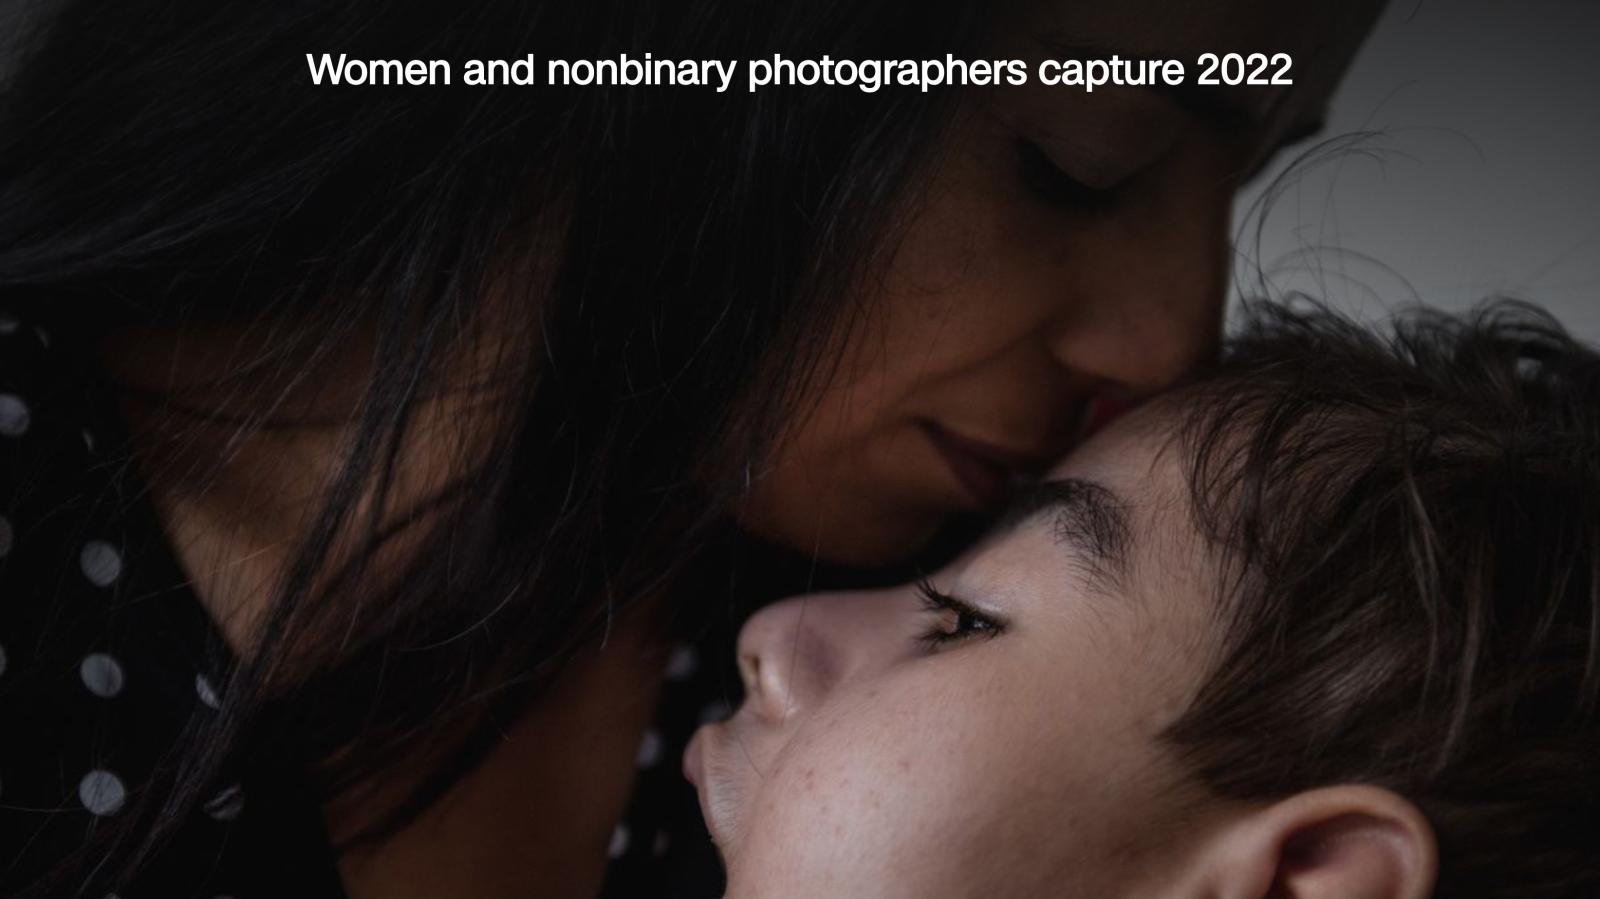 Women and nonbinary photographers capture 2022, CNN